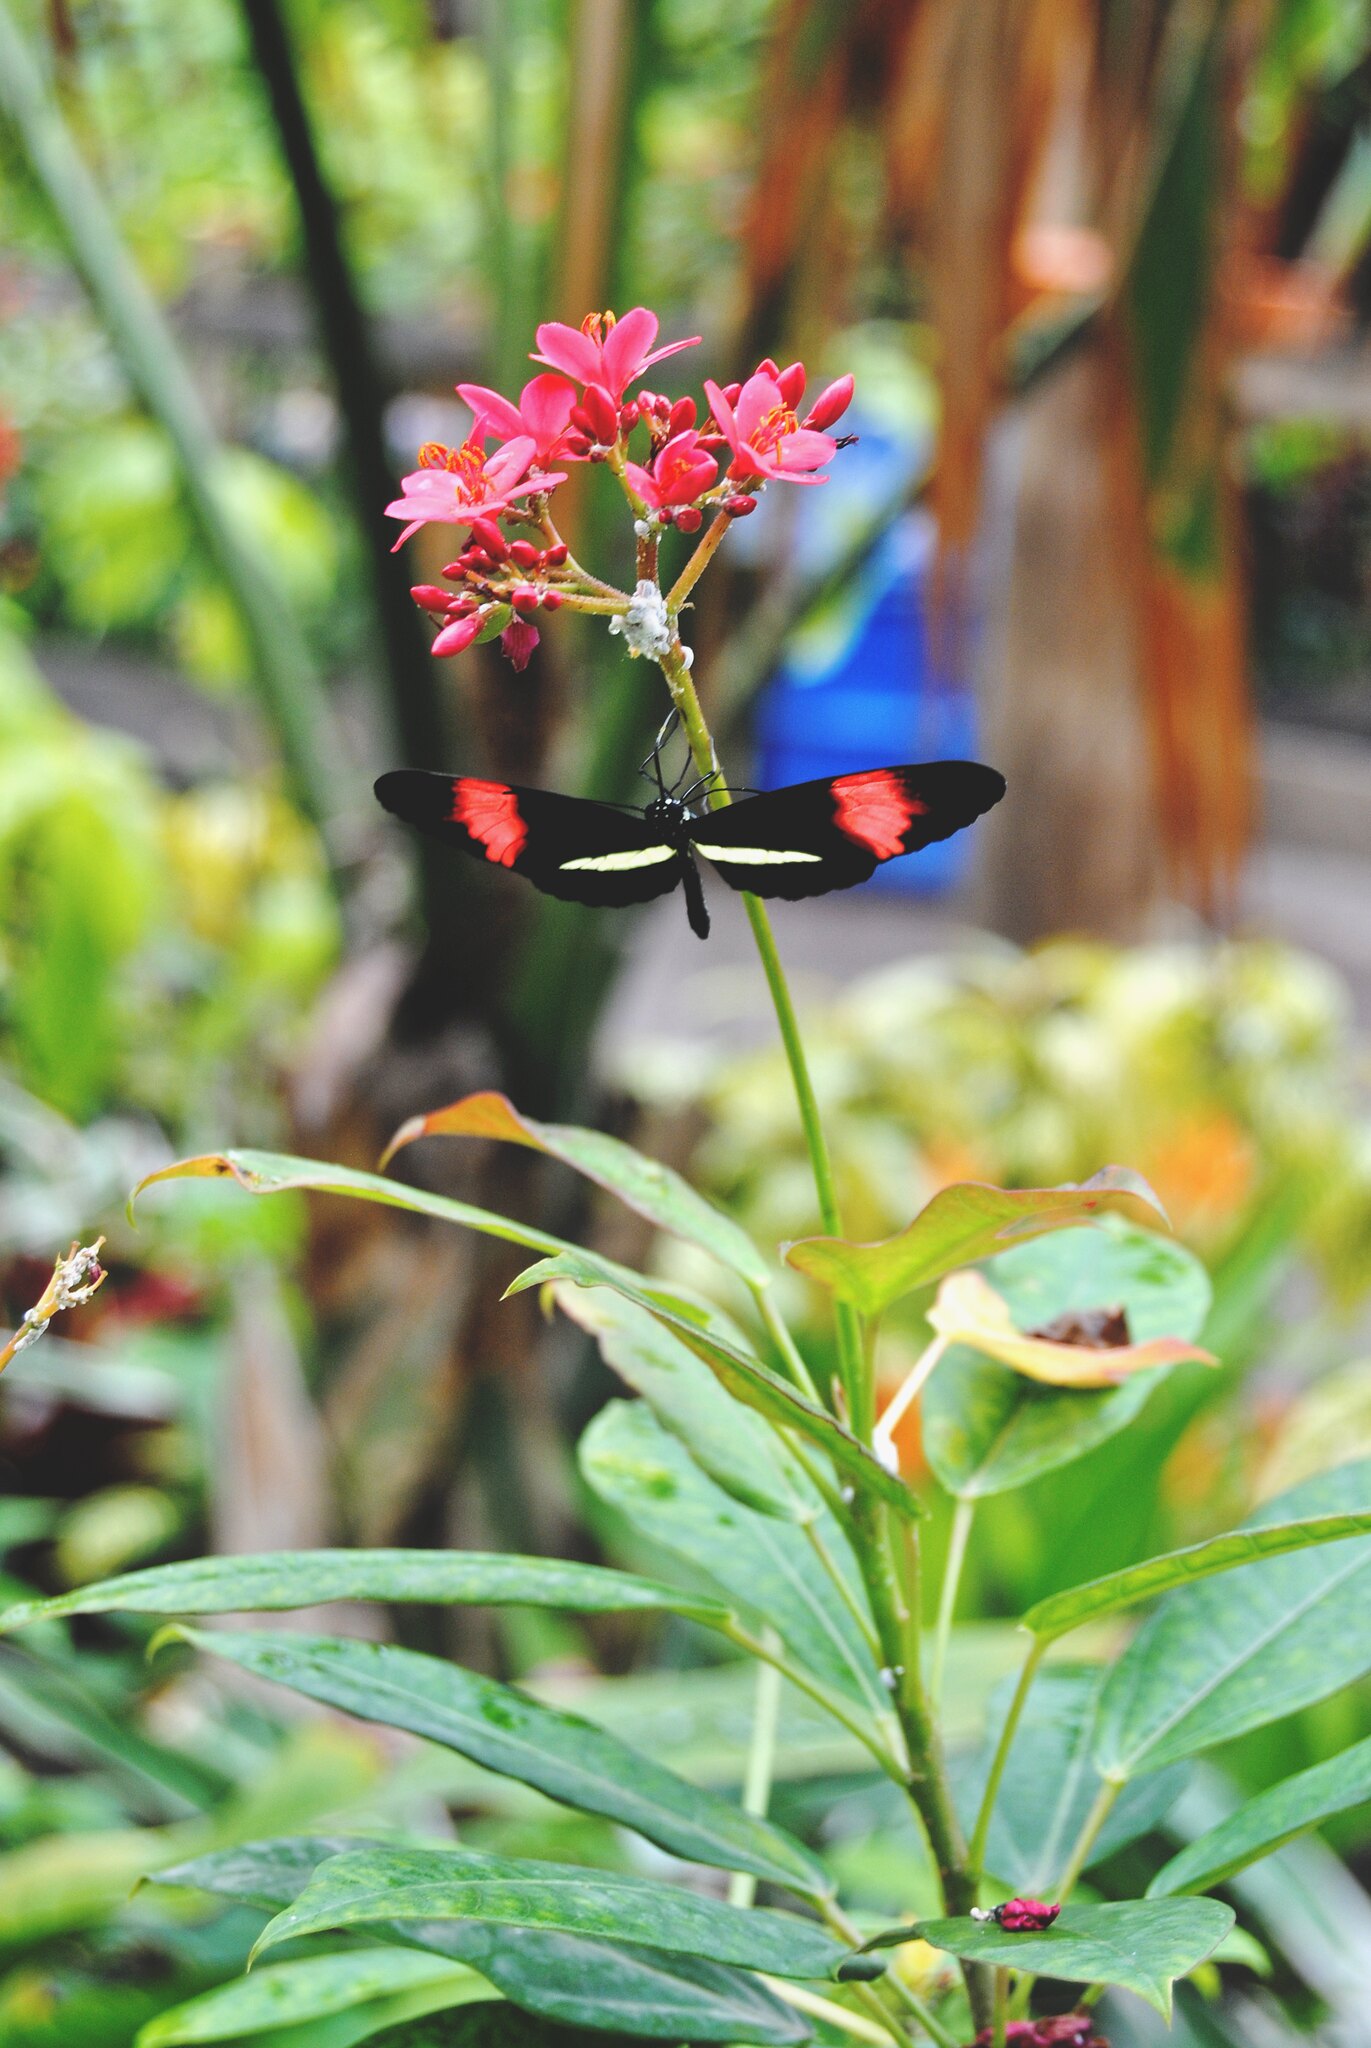 Amazon Butterflies at the Rotterdam Zoo (Blijdorp).